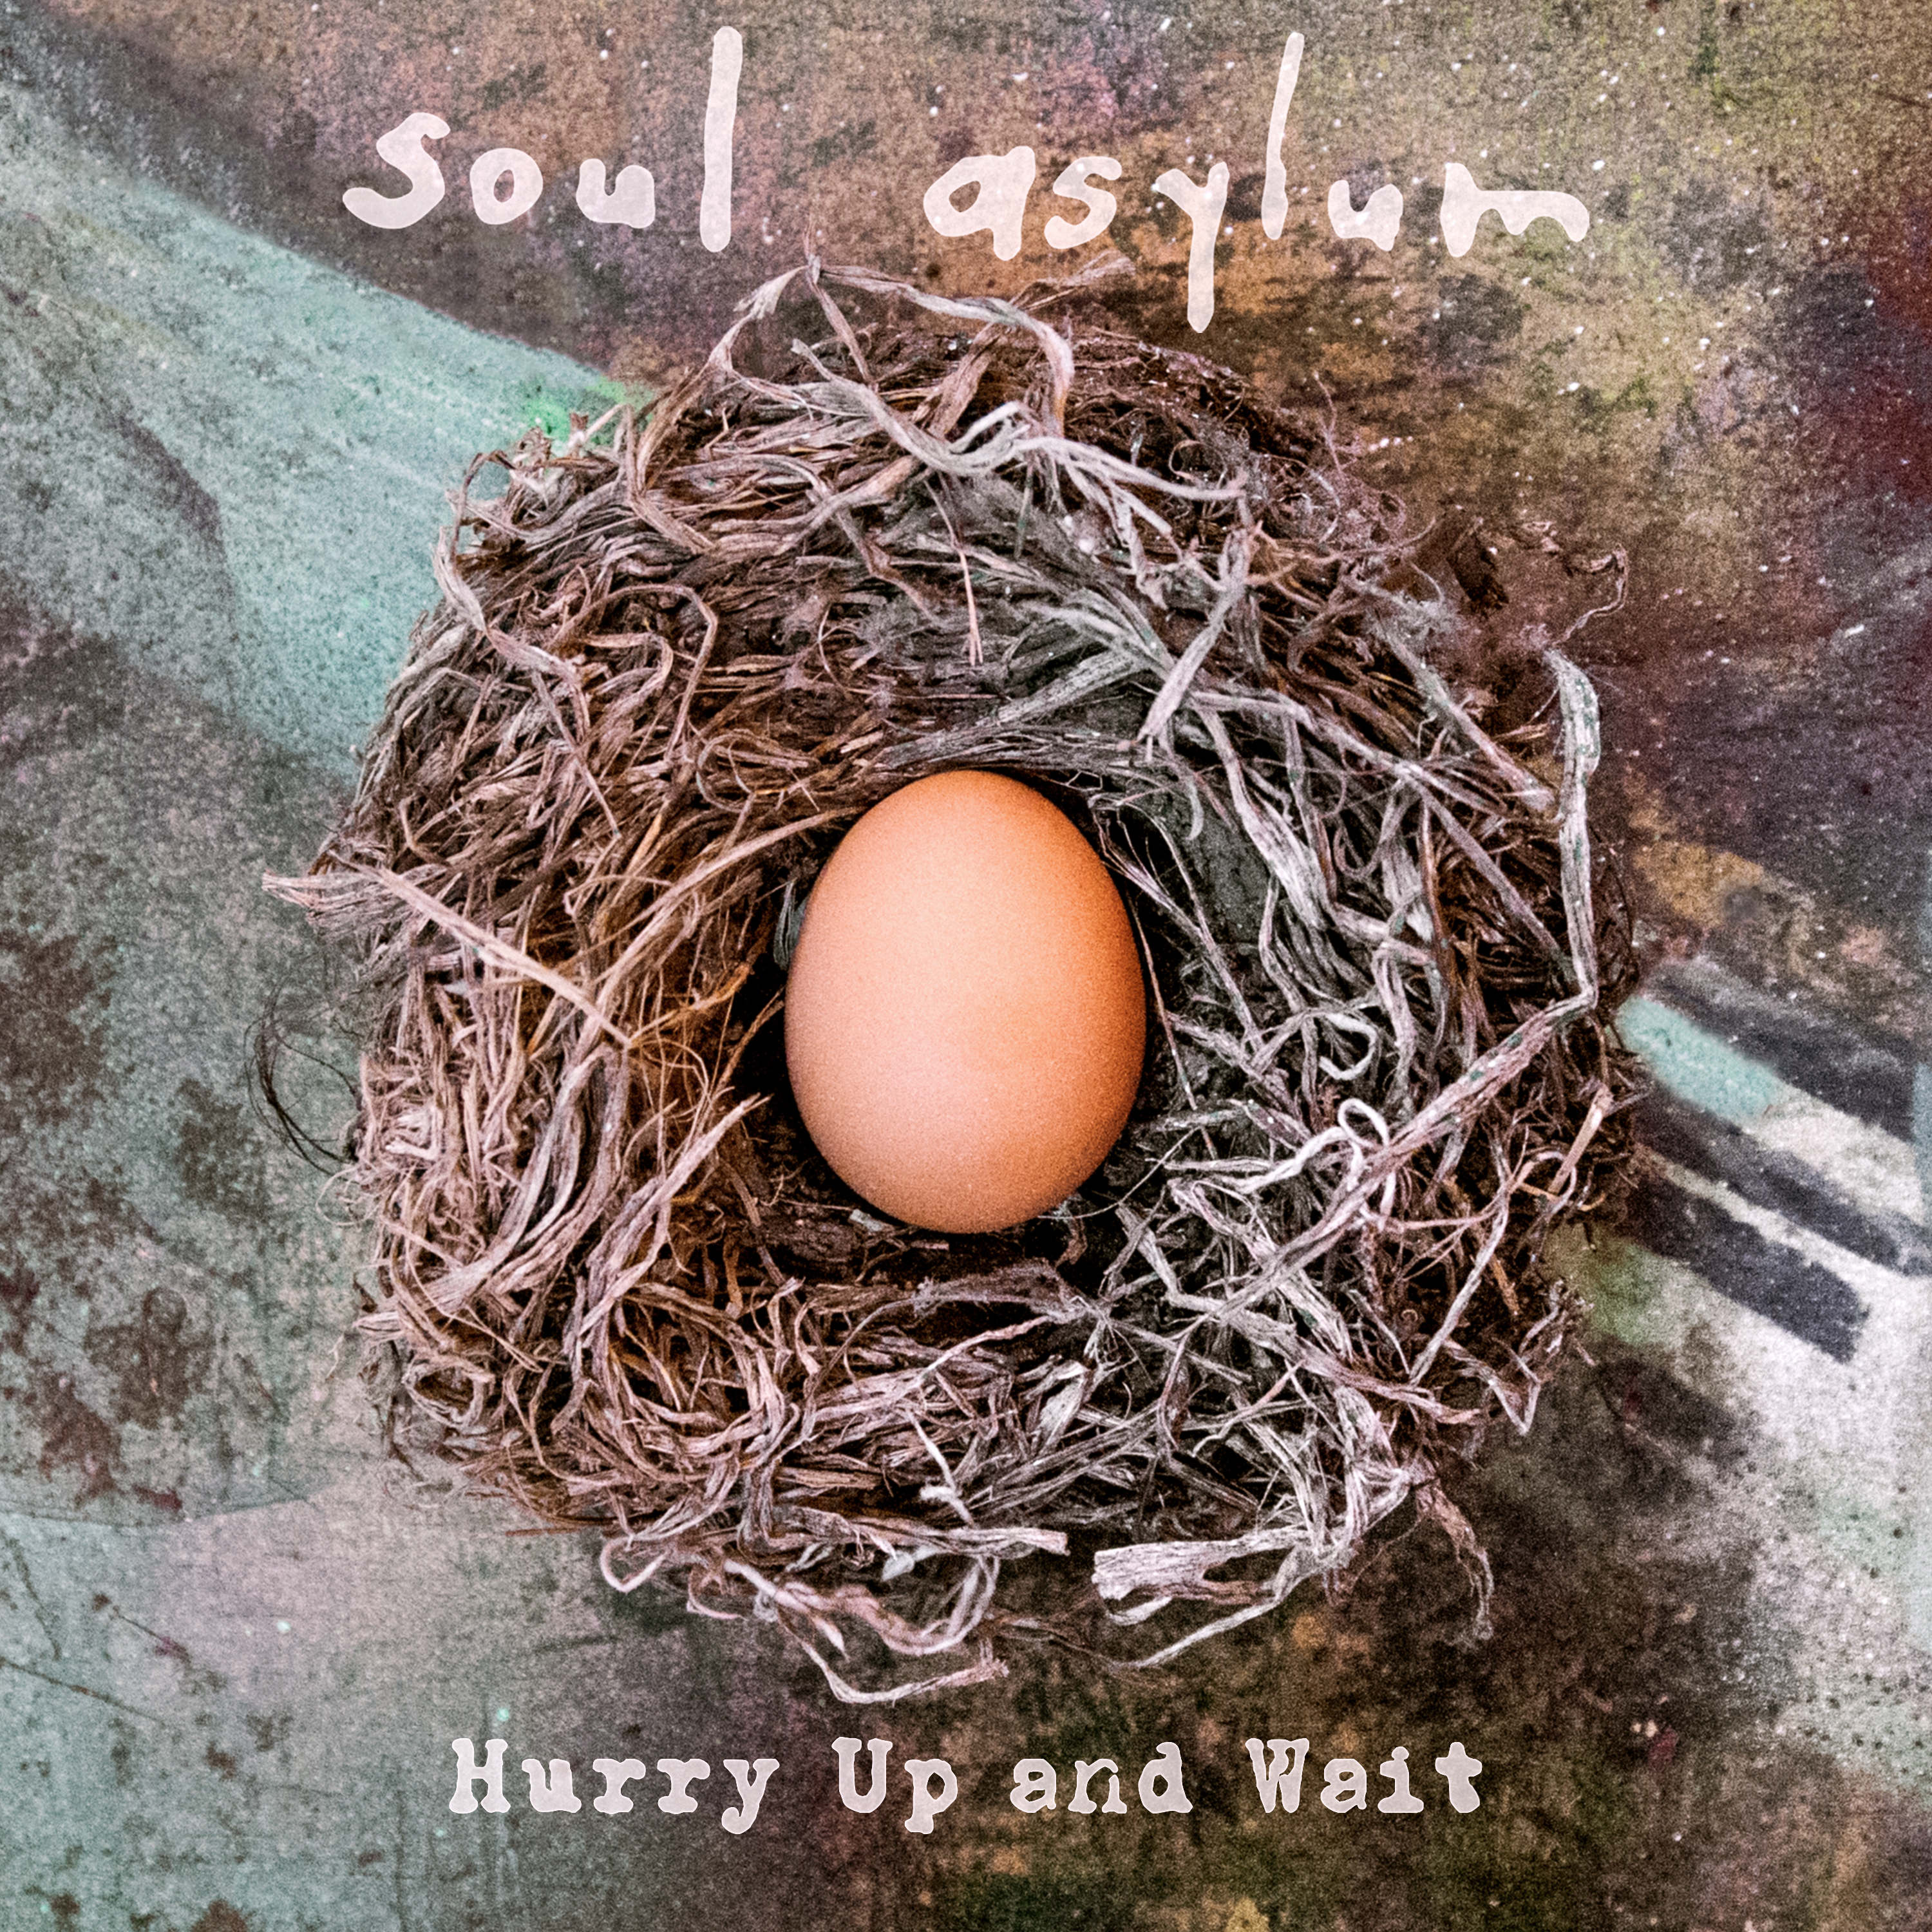 Soul Asylum Releases New Music Today - Studio Album out April 17, 2020